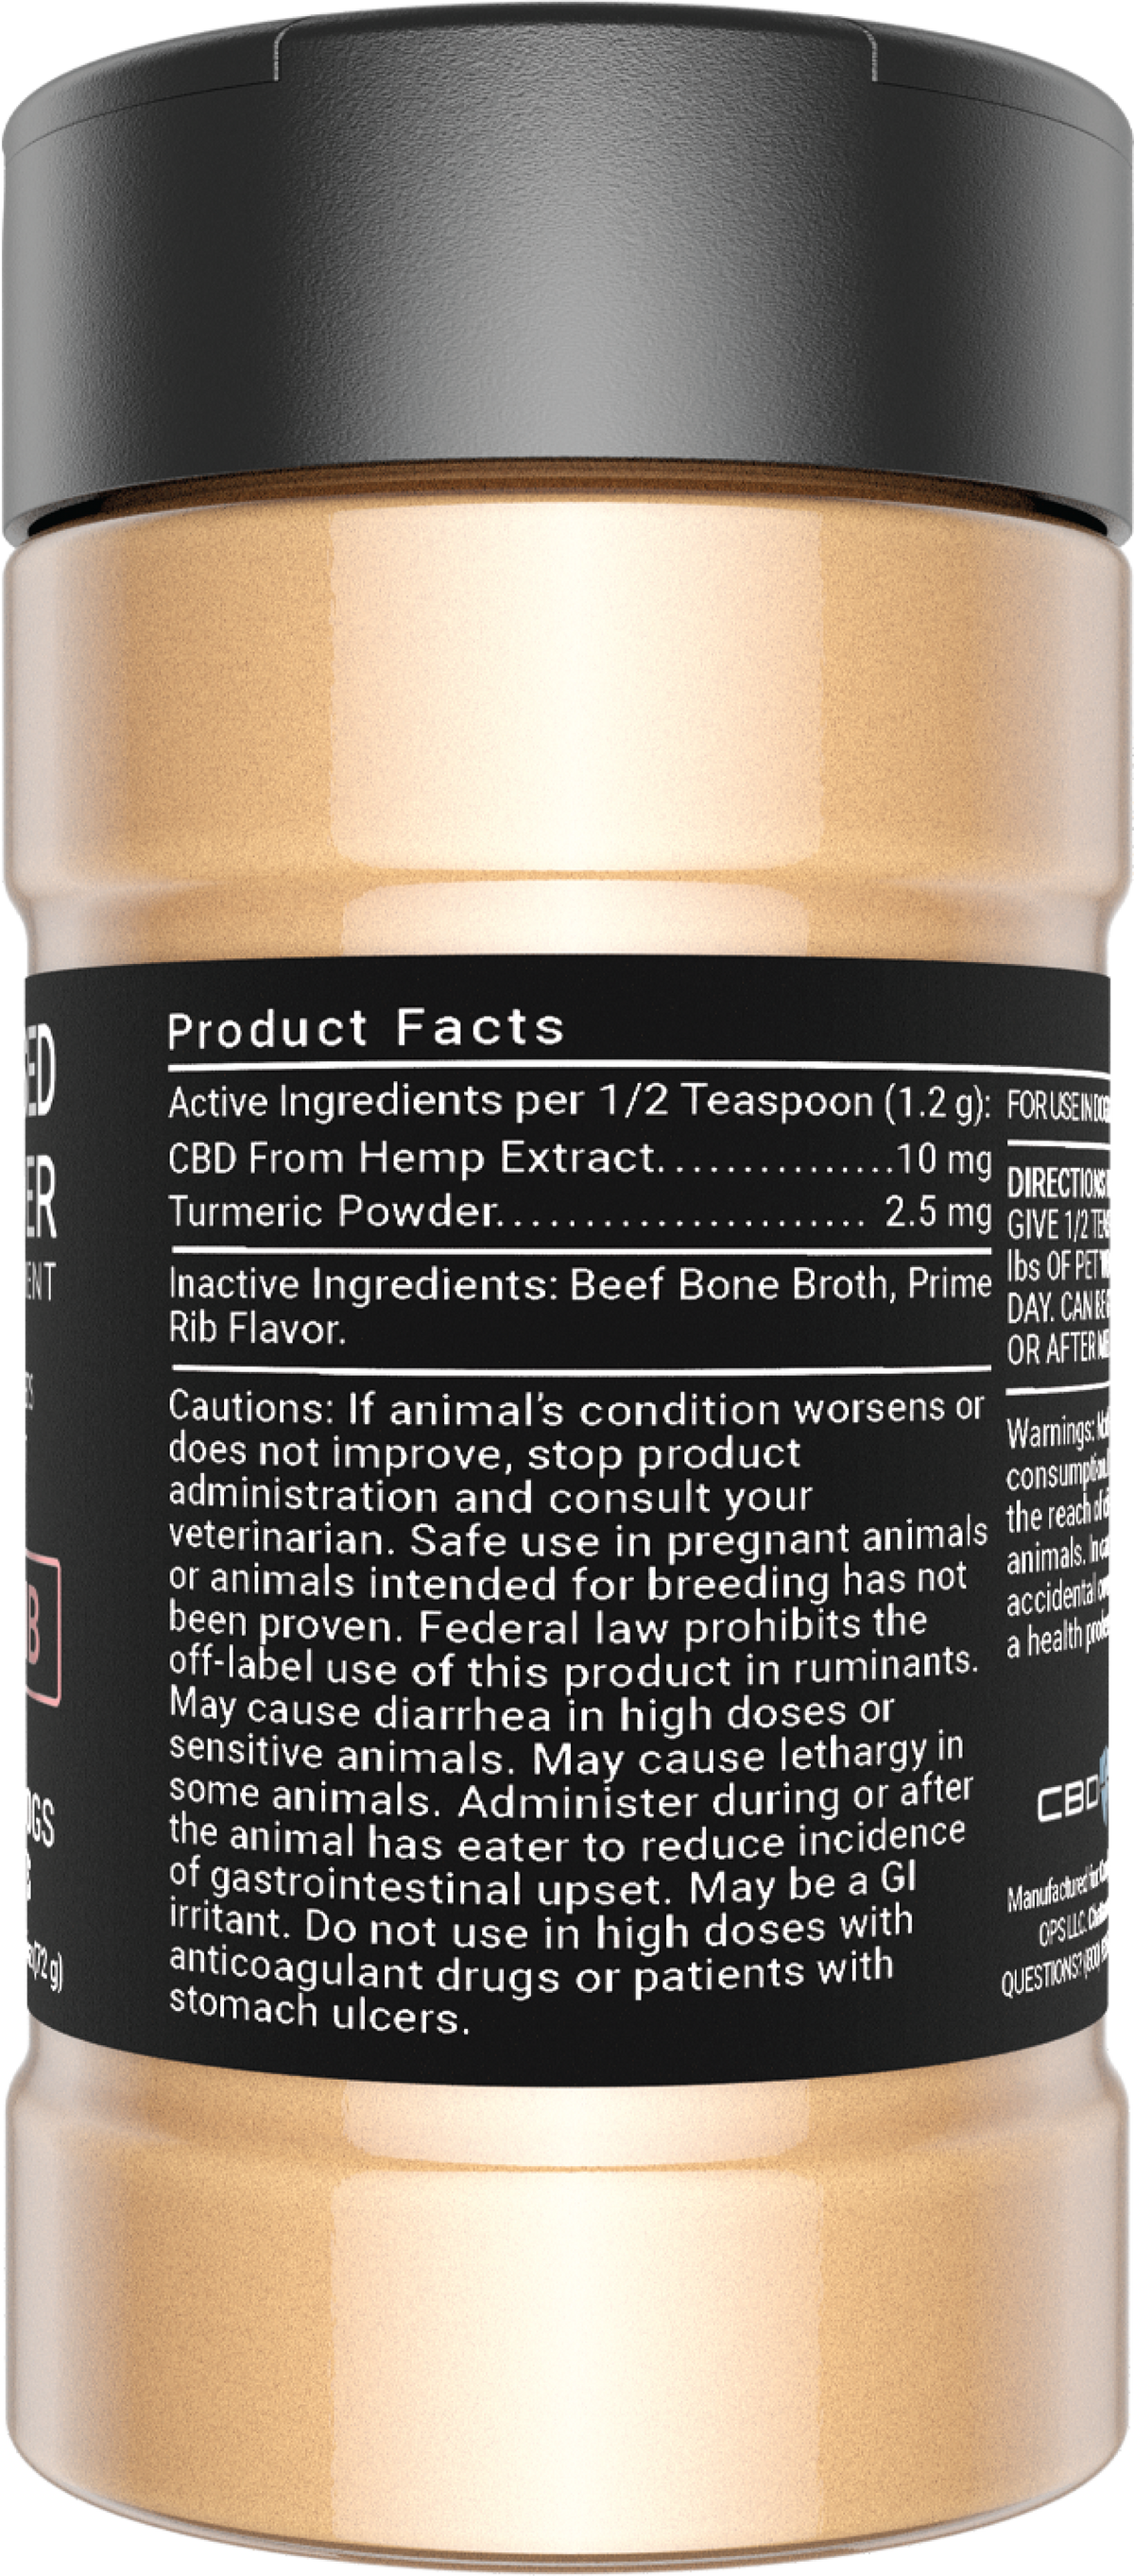 CBDOps hemp infused CBD pet powder product facts.